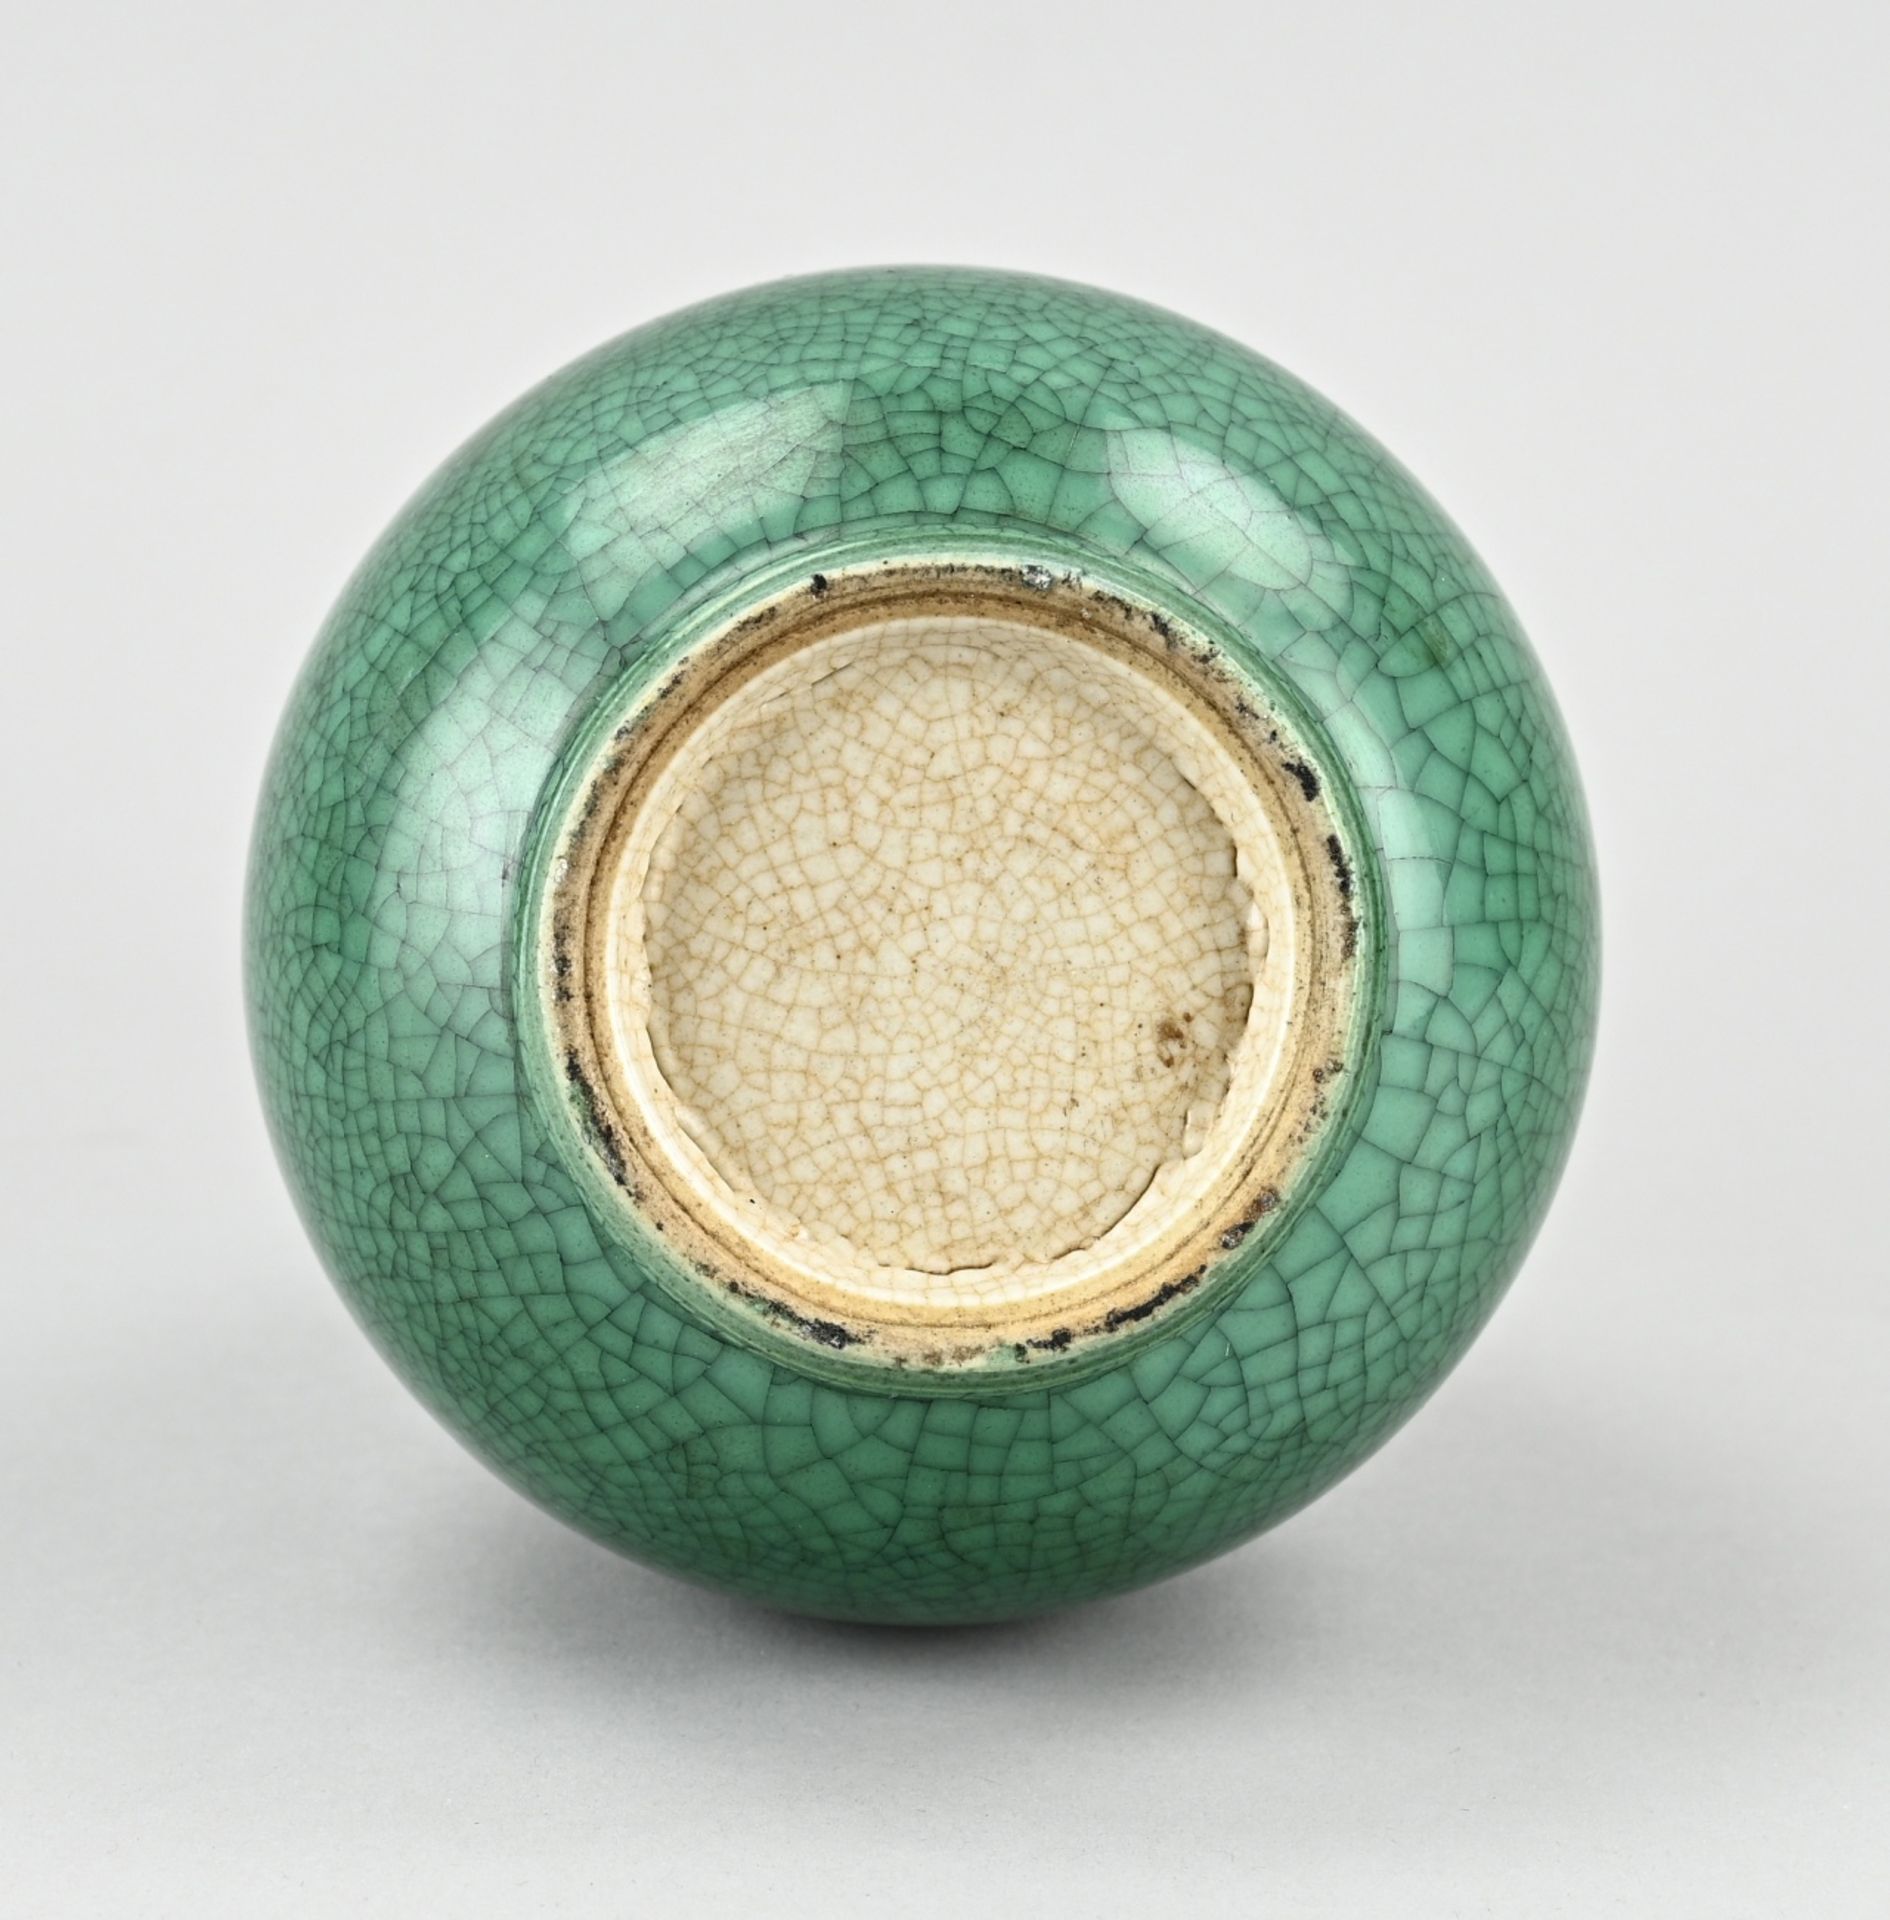 Chinese knob vase, H 20.5 cm. - Image 2 of 2